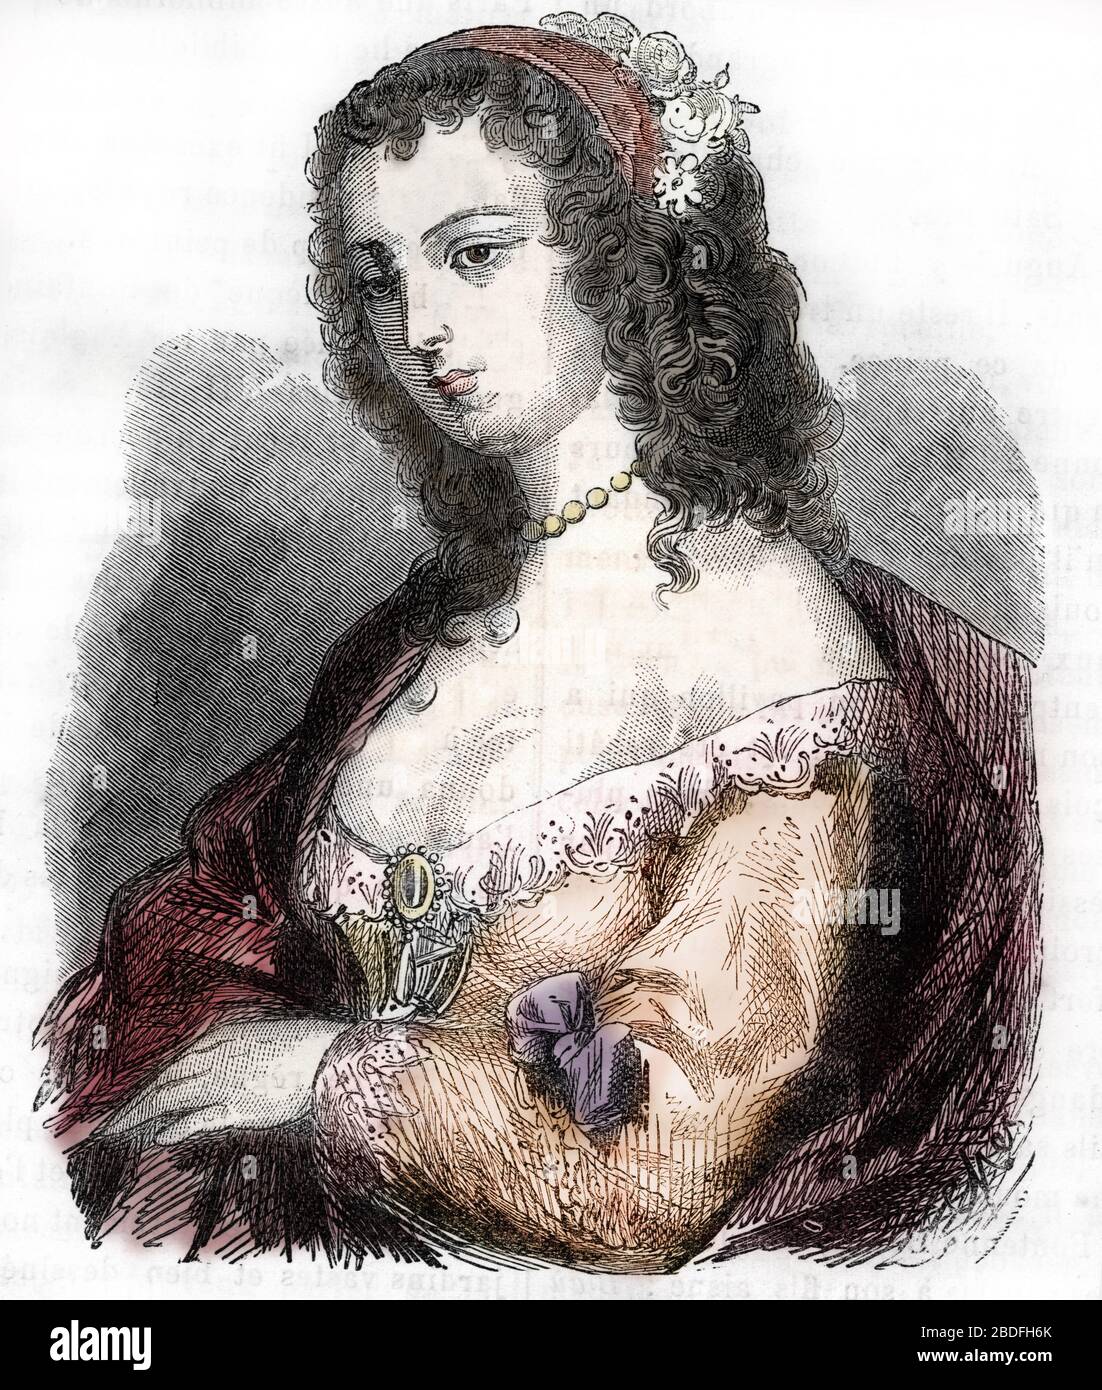 'Retrato de Anne d'Autriche (1601-1666) reine de France' (Retrato de la reina de Francia Ana de Austria) Grabado siglo 19 Colección privada Foto de stock